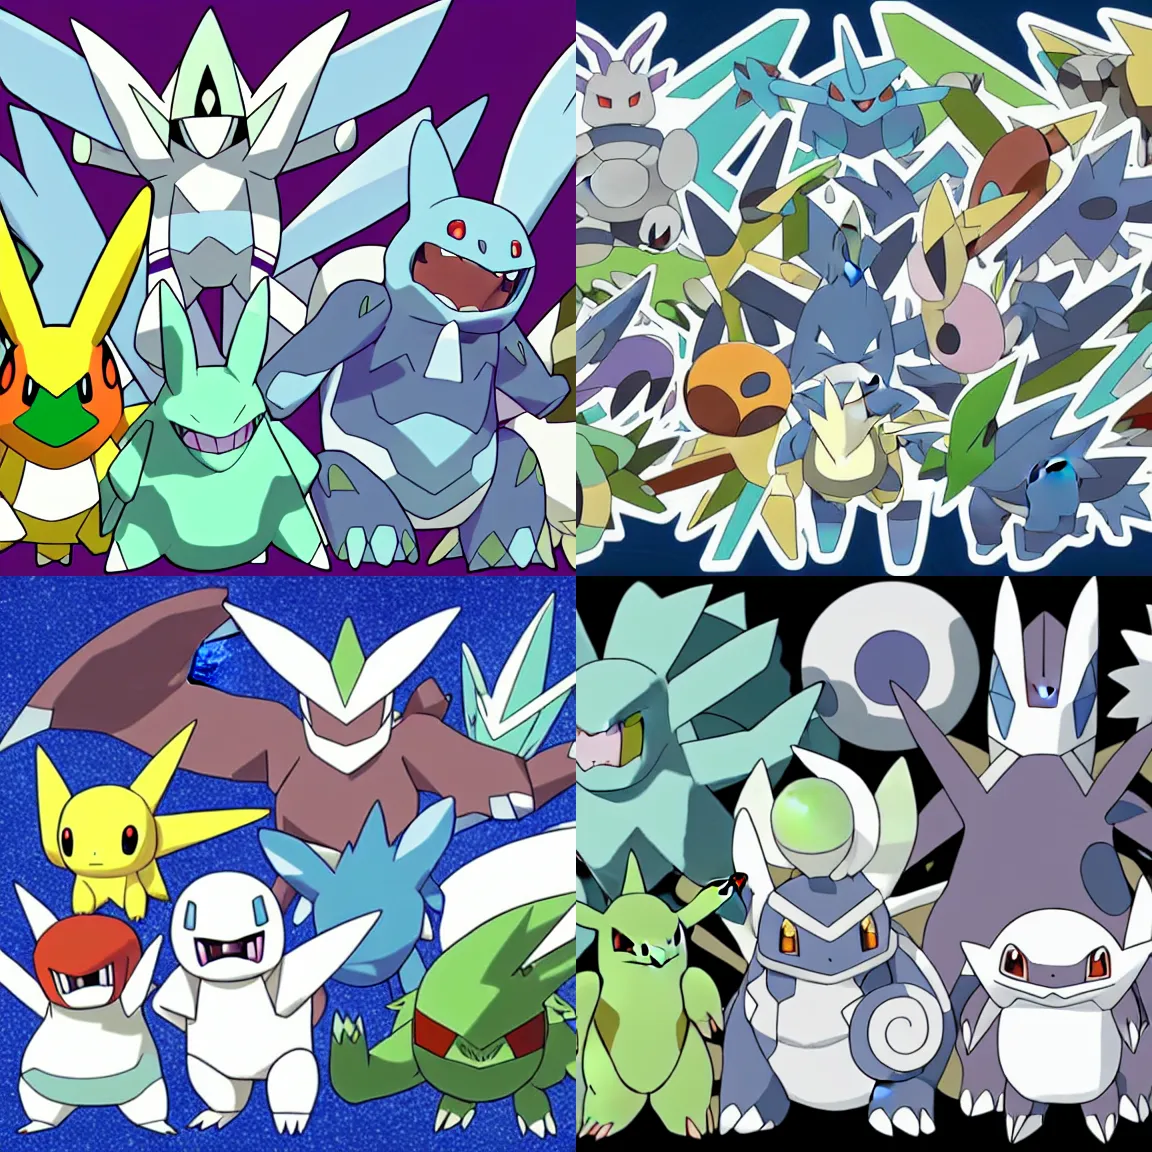 official art of a diverse crowd of Rock-type Pokémon